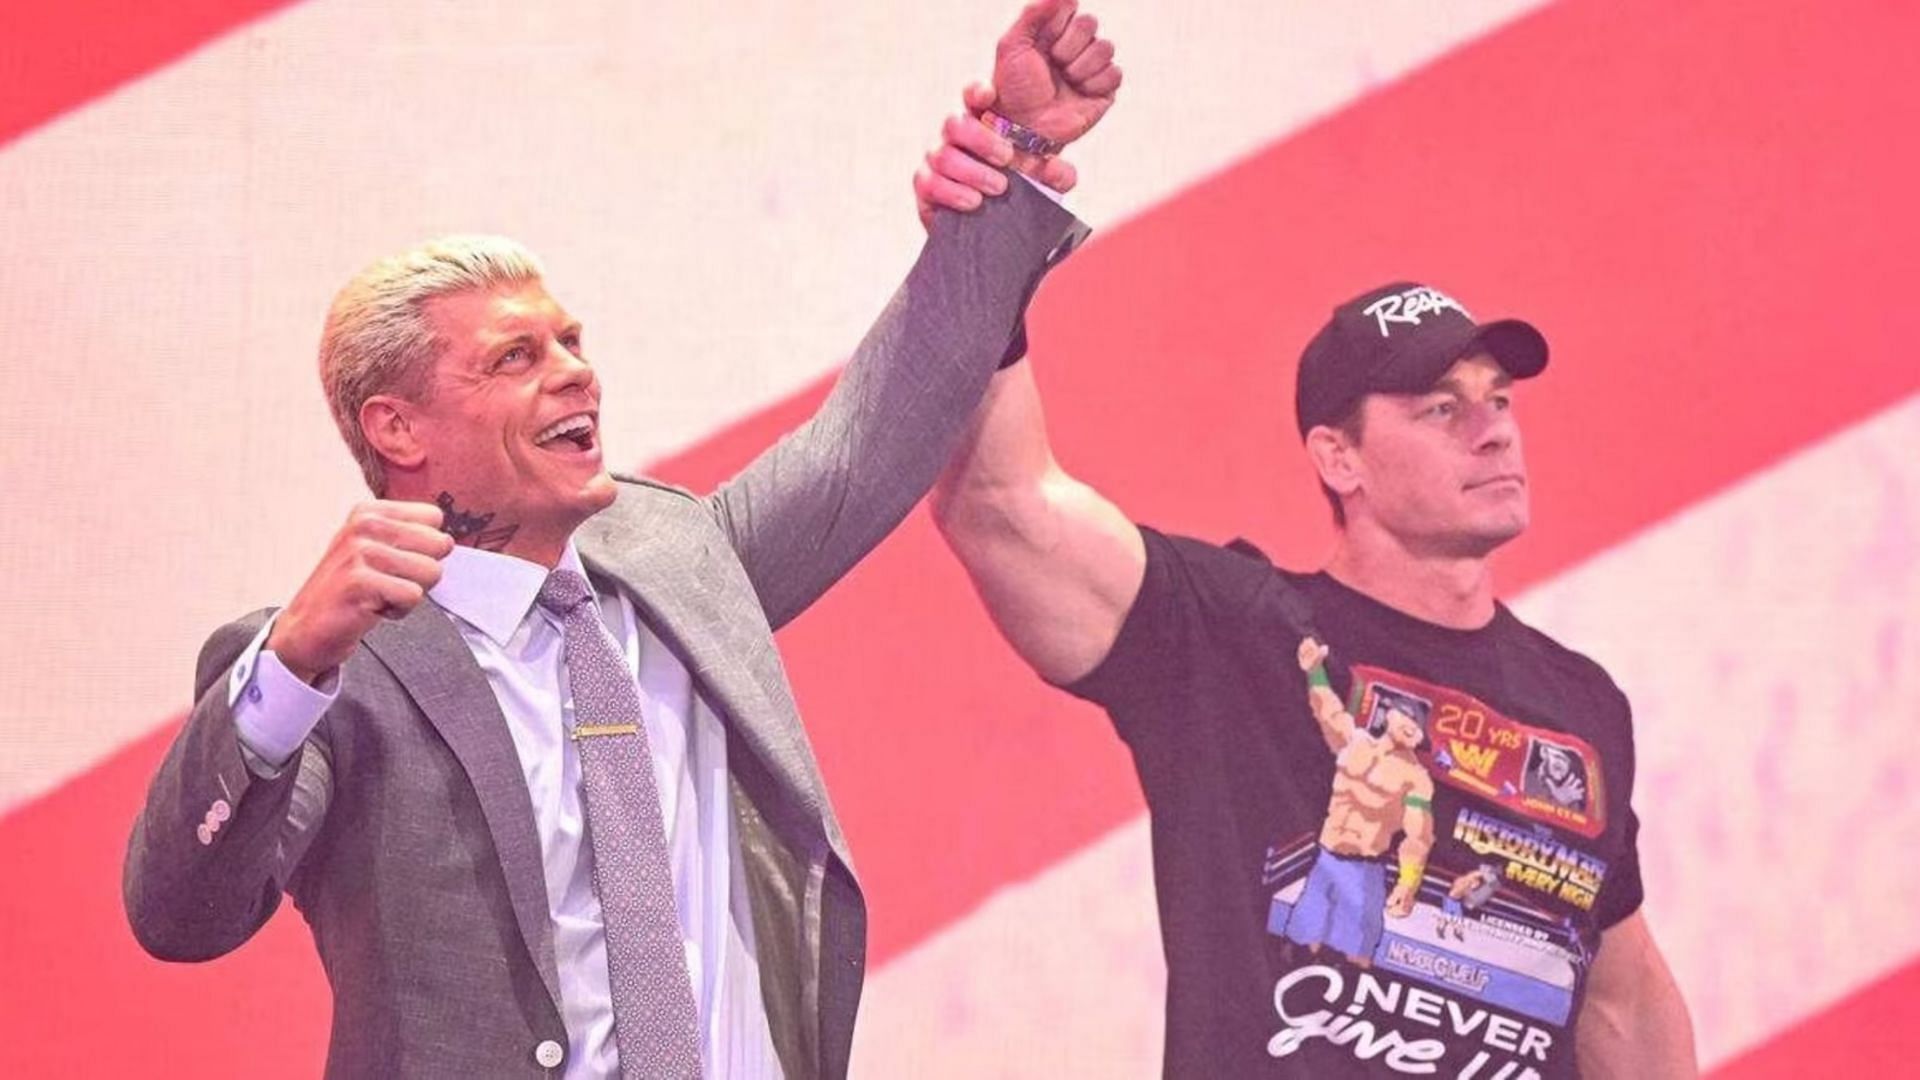 Cody Rhodes has a good relationship with WWE legend John Cena